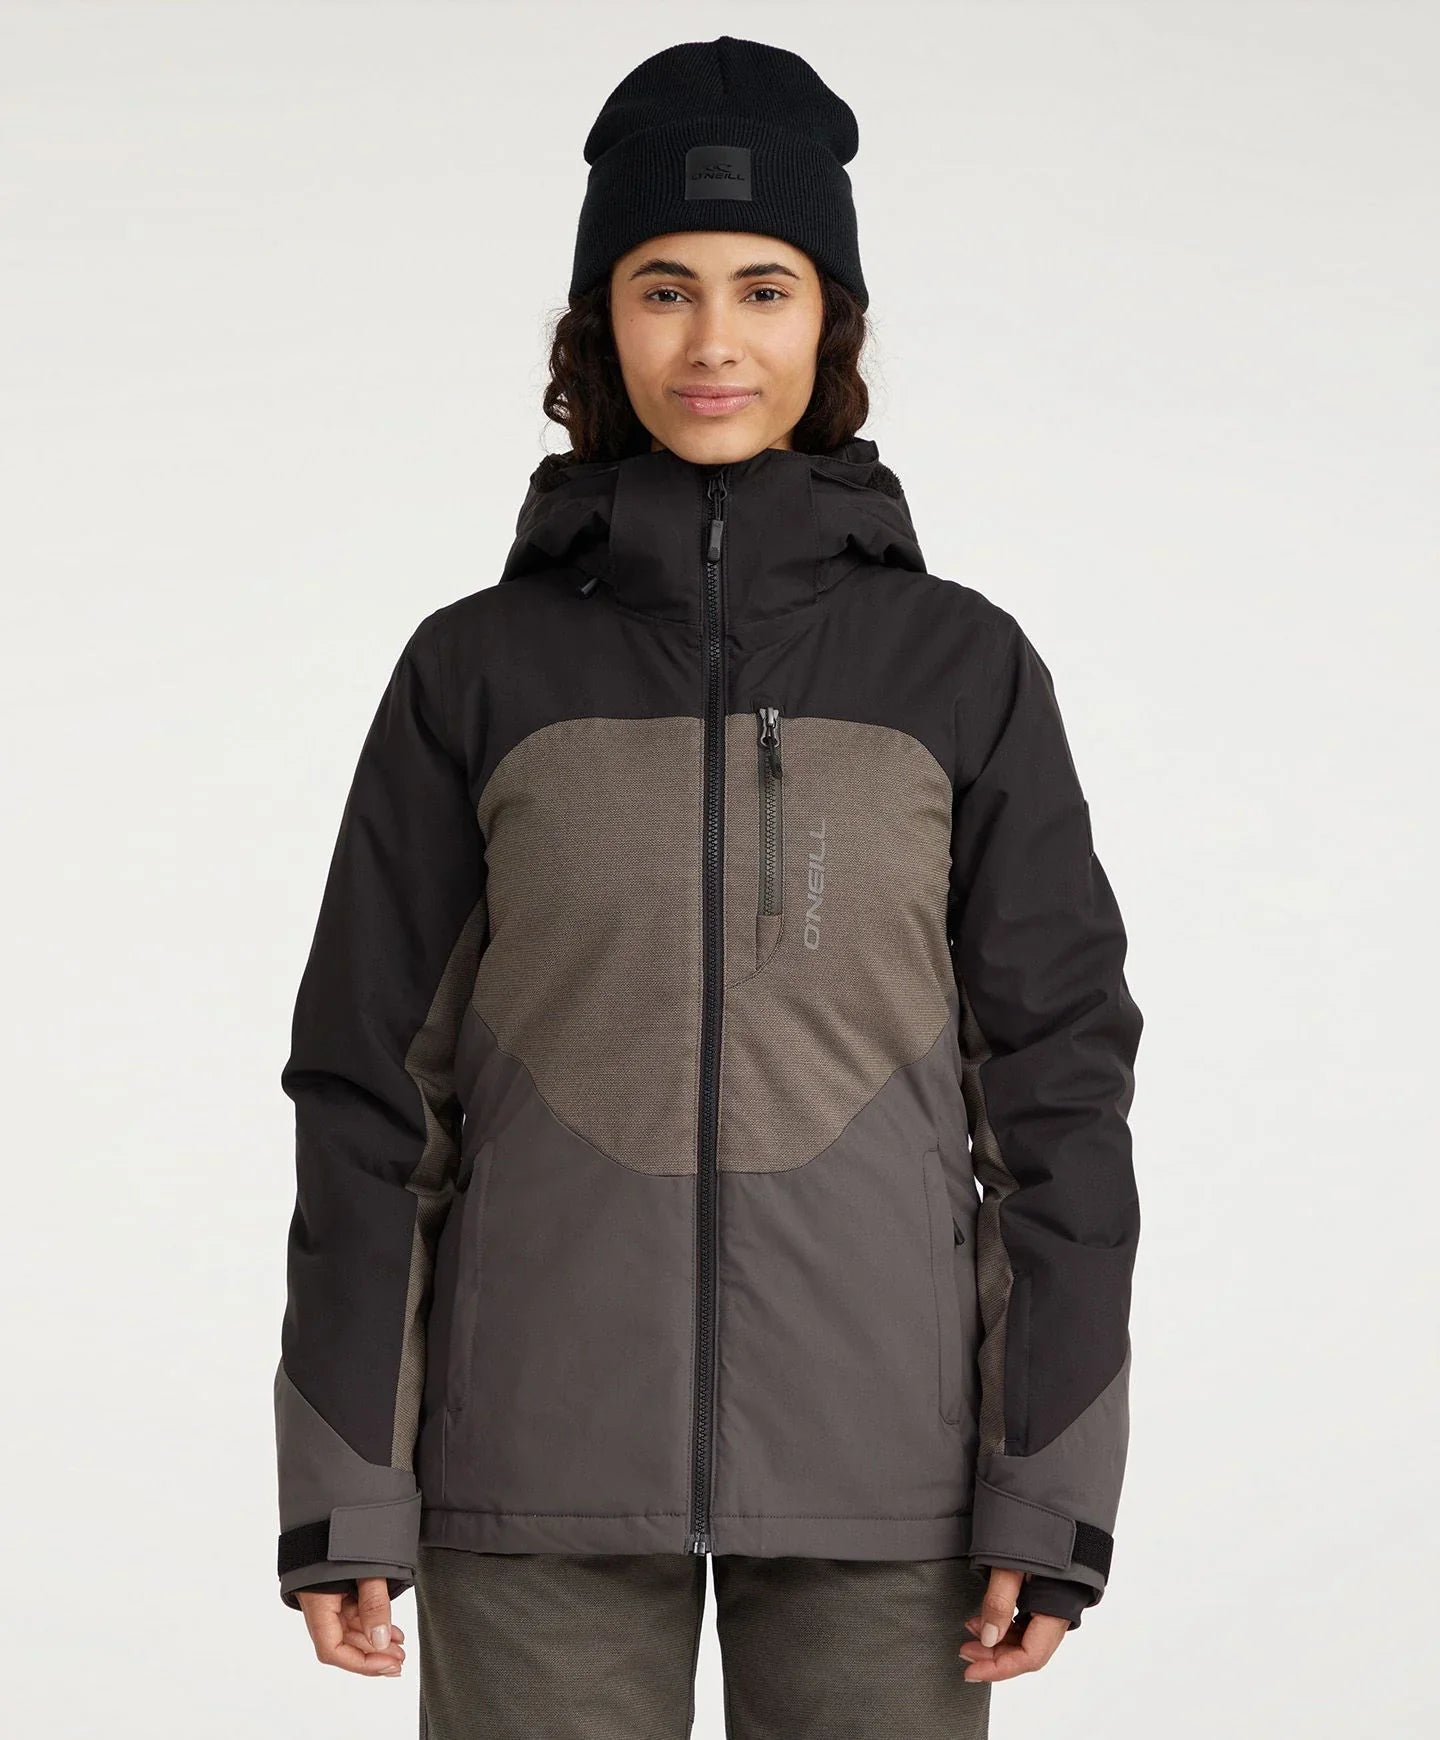 O'Neill Women's Carbonite Jacket - Black Out Women's Snow Jackets - Trojan Wake Ski Snow